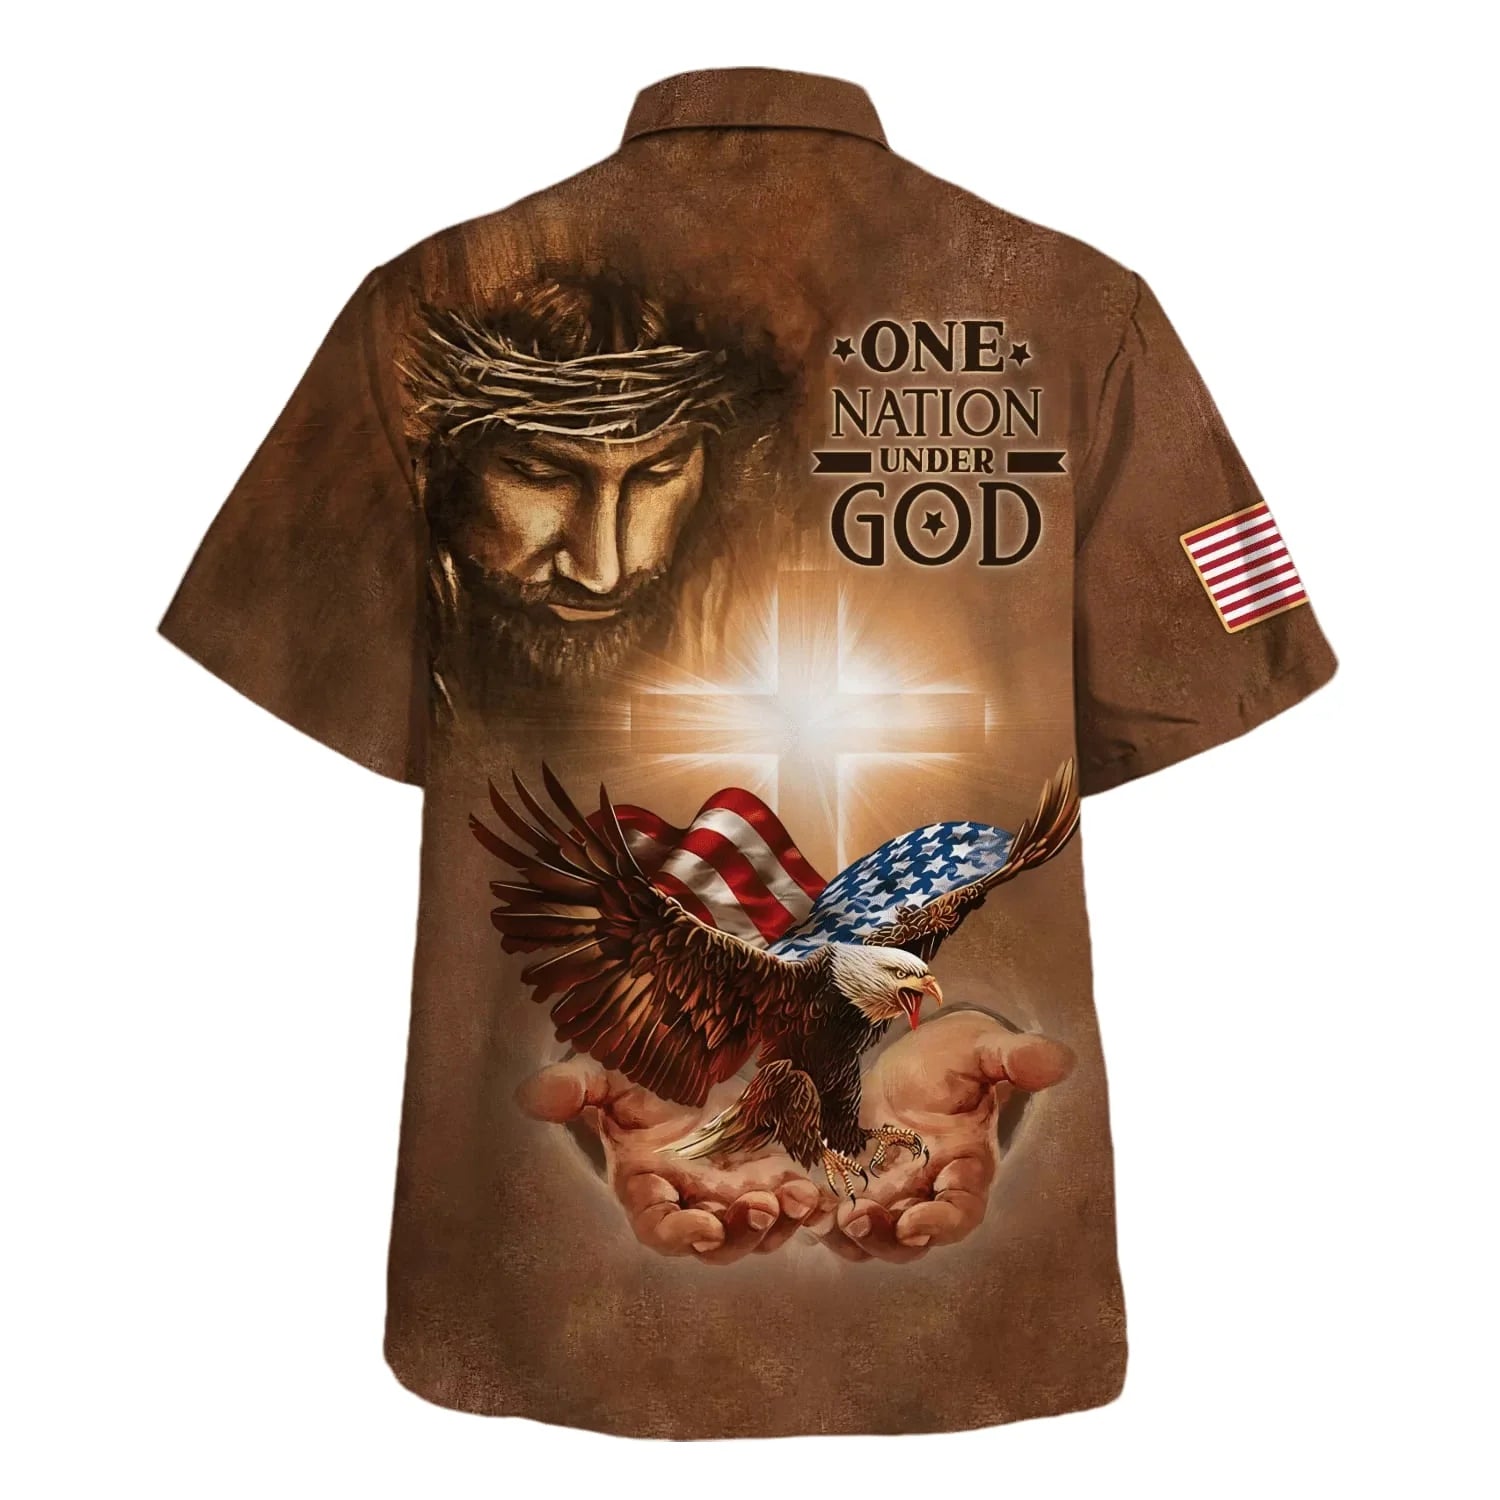 Christianartbag Hawaiian Shirt, One Nation Under God Jesus Holy In Hand Eagle Hawaiian Shirts, Christian Hawaiian Shirts For Men & Women. - Christian Art Bag